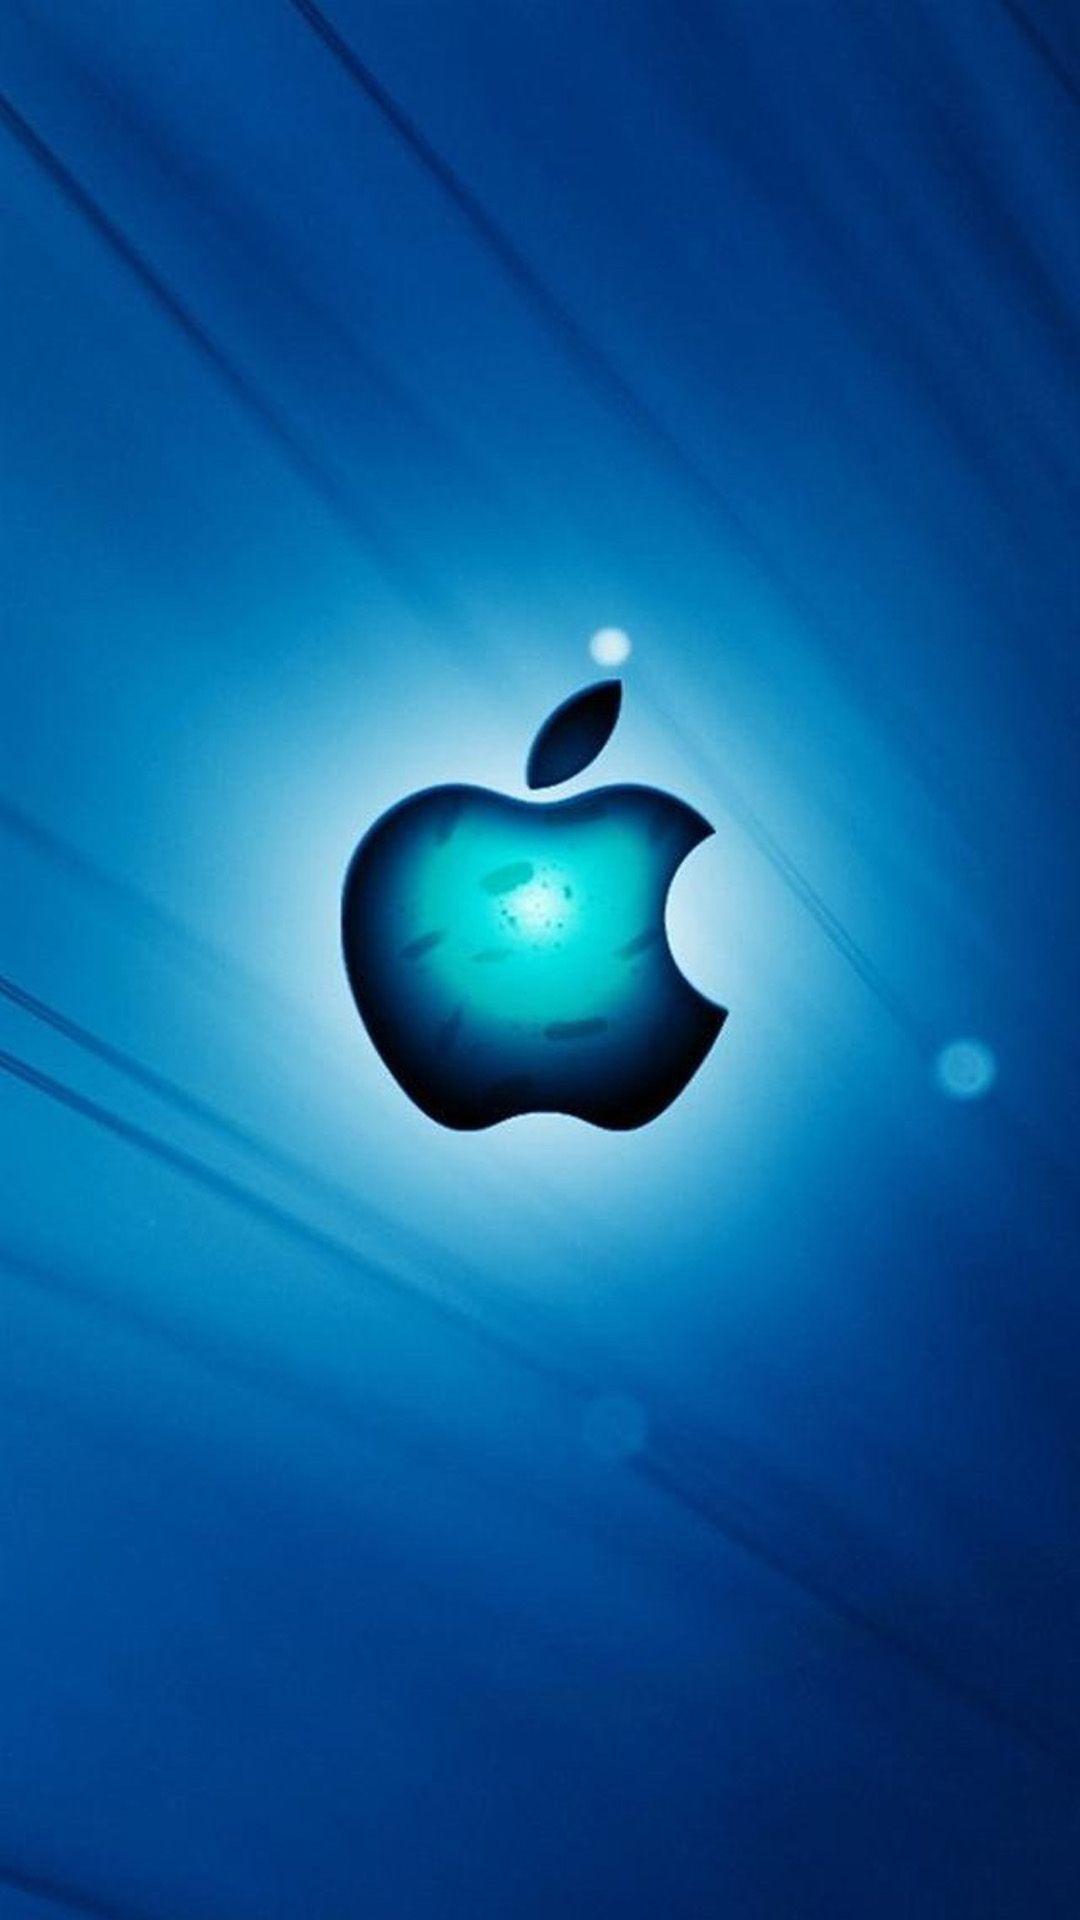 D Apple Logo iPhone Wallpaper iPod Wallpaper HD Free